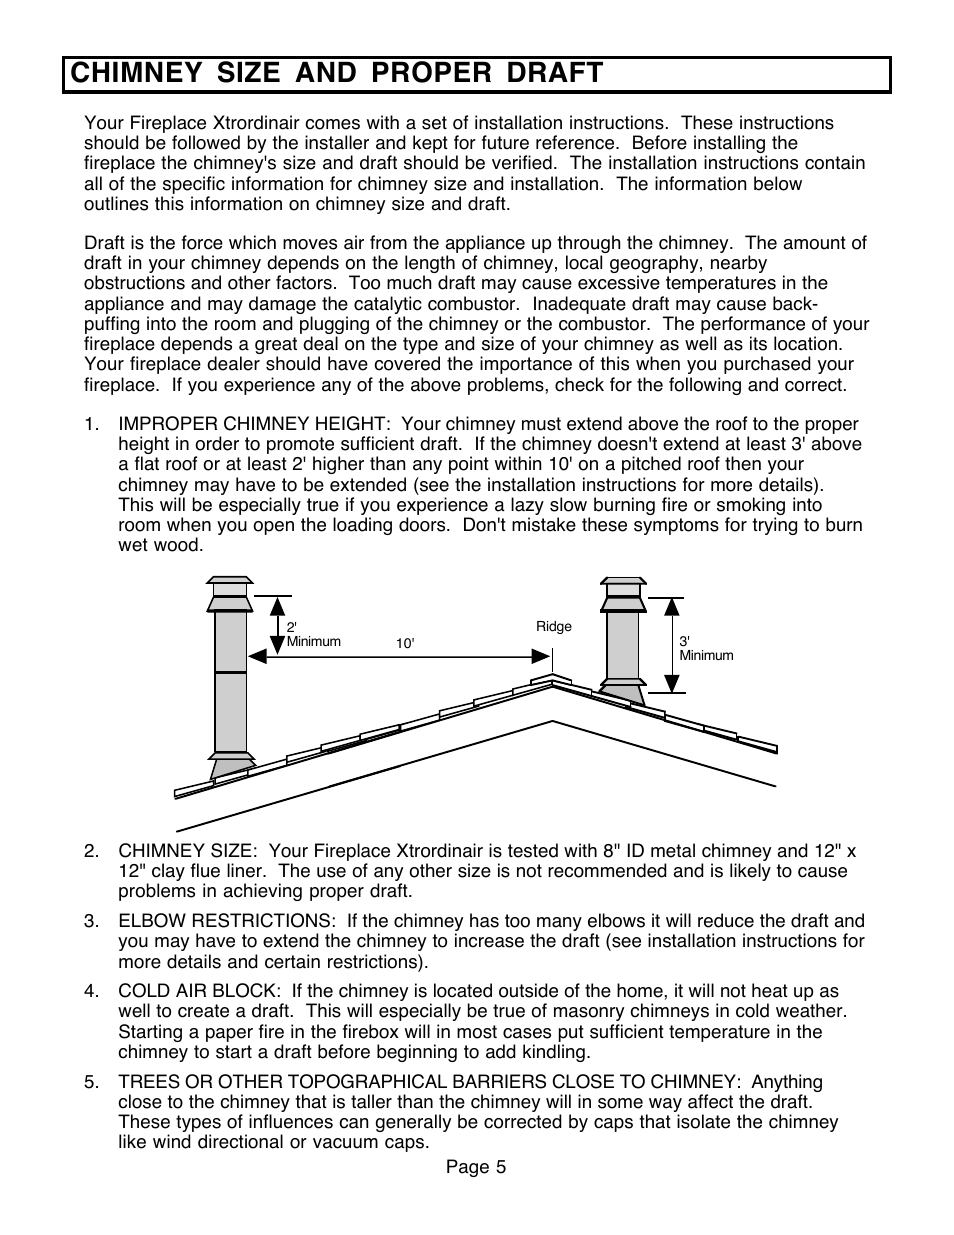 Chimney size and proper draft | FireplaceXtrordinair 36A-BI User Manual | Page 5 / 30